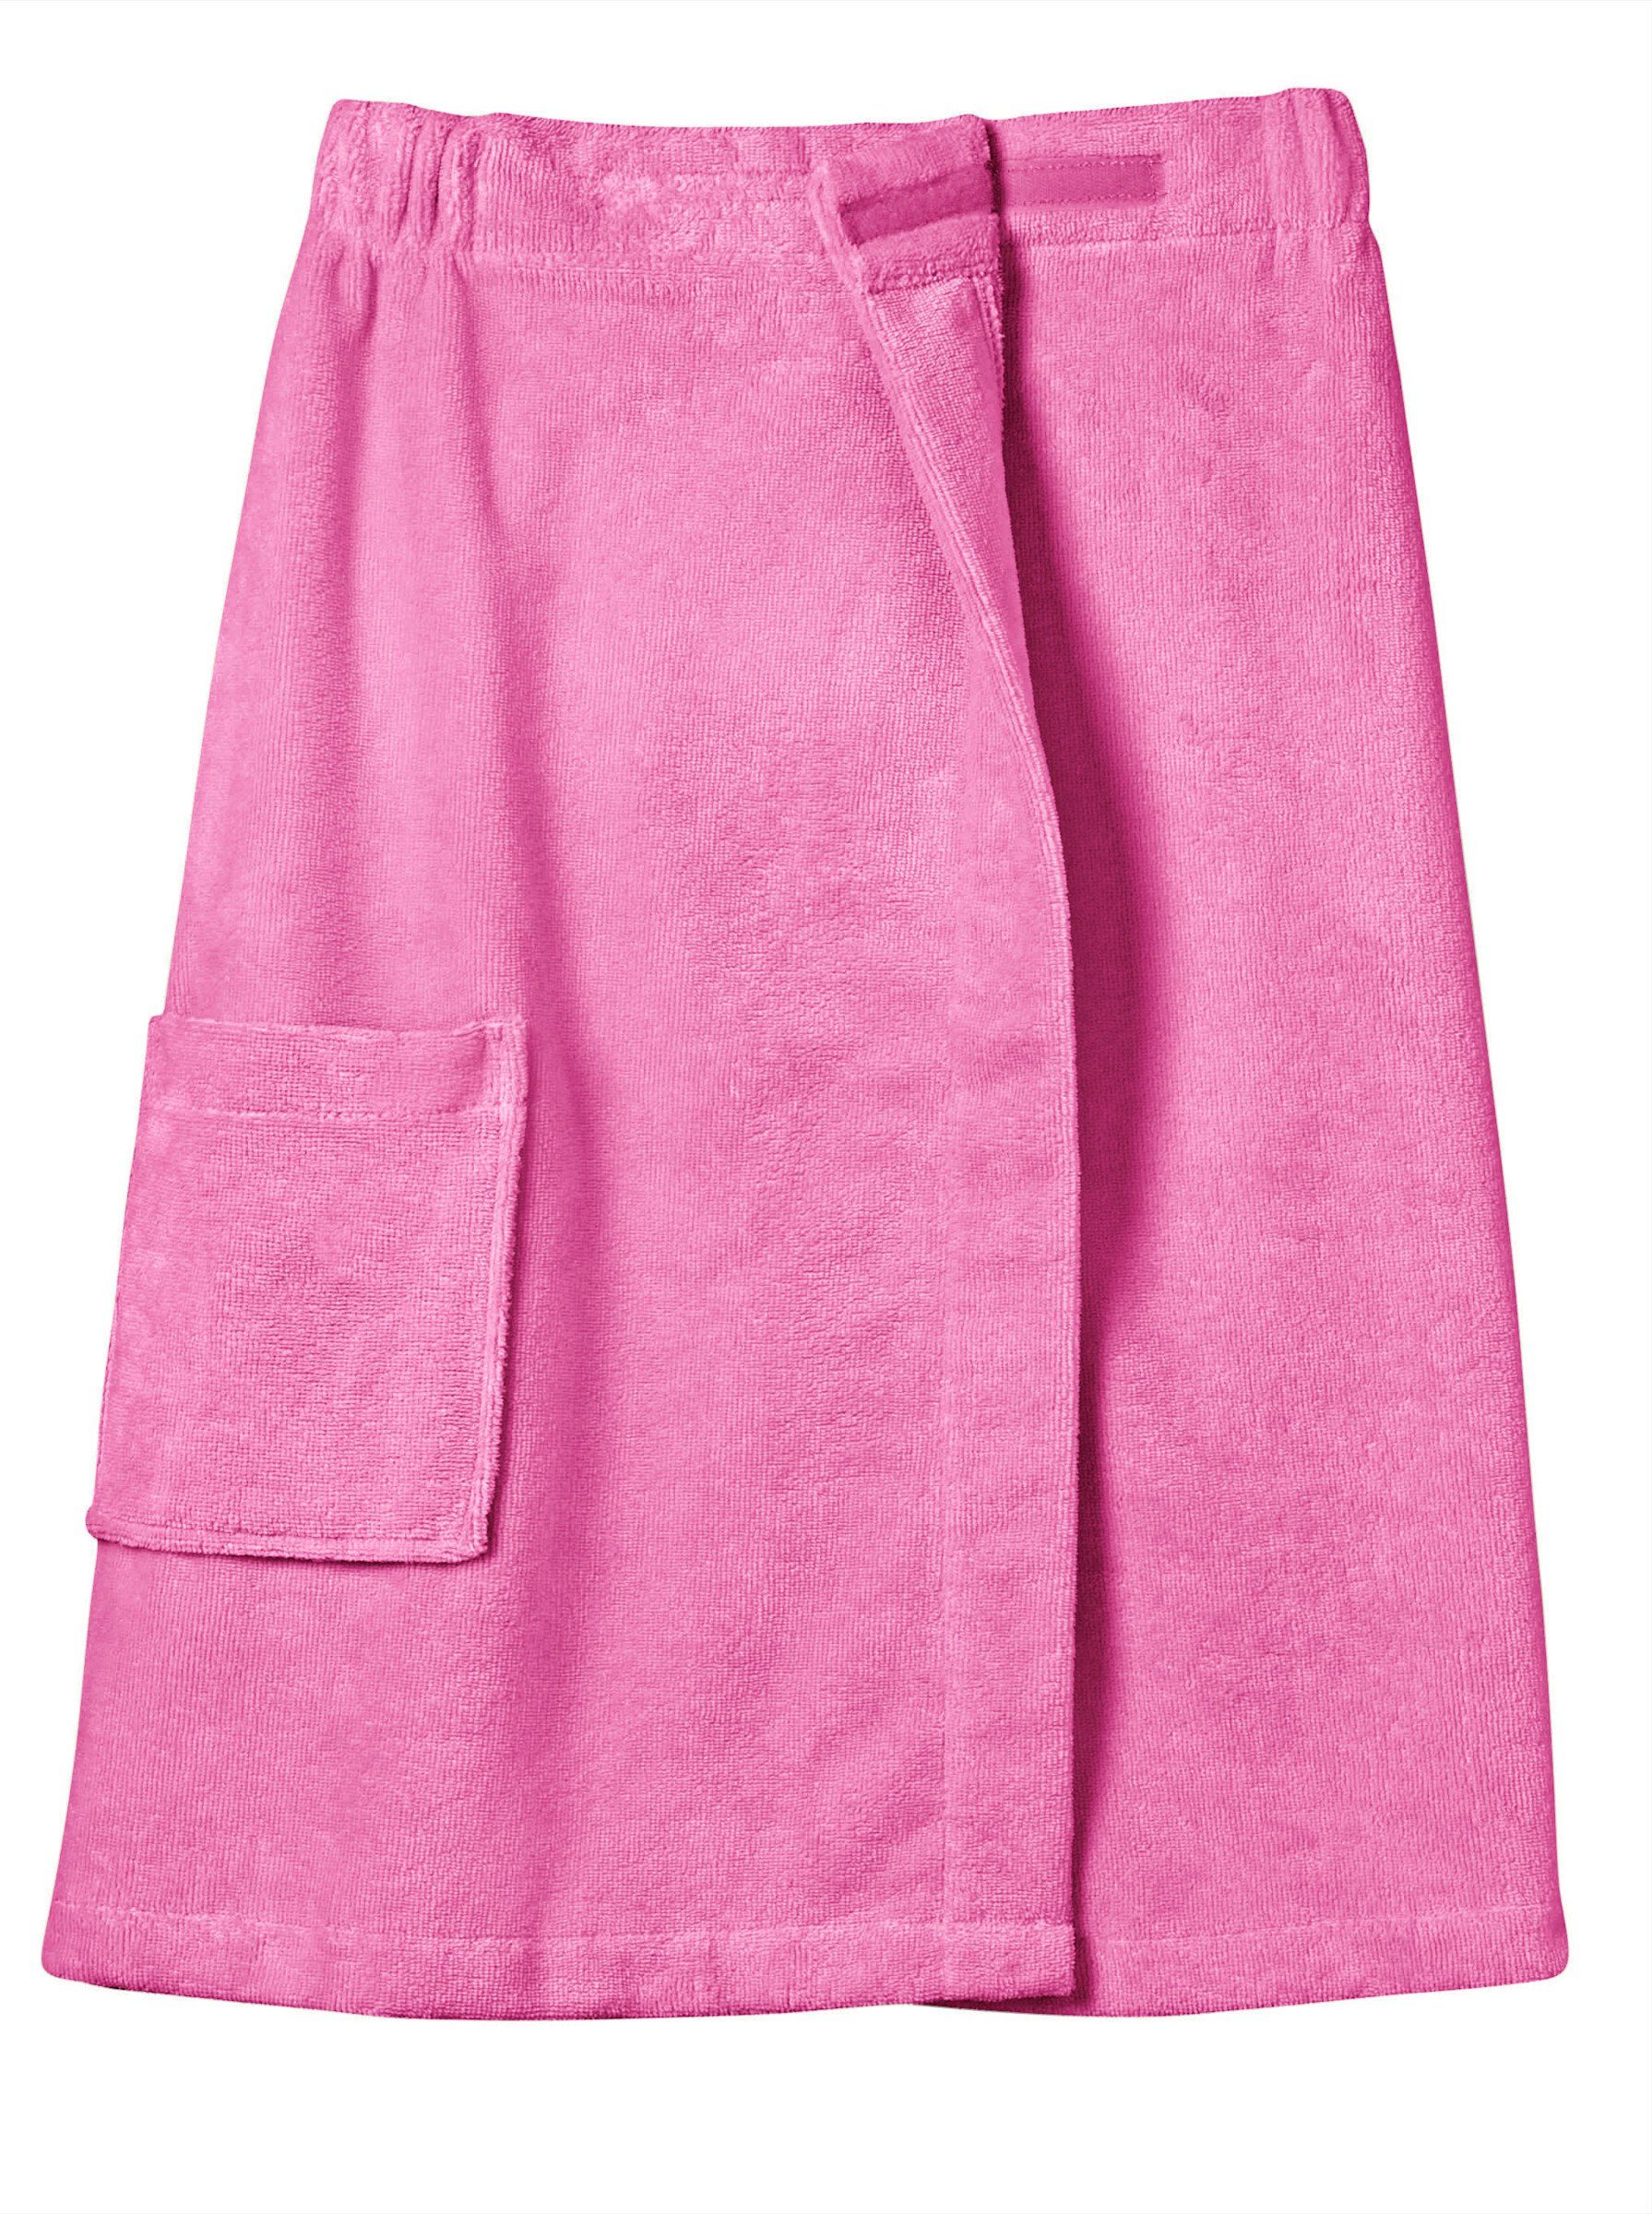 Baumwolle Damenbademantel, Plantier pink